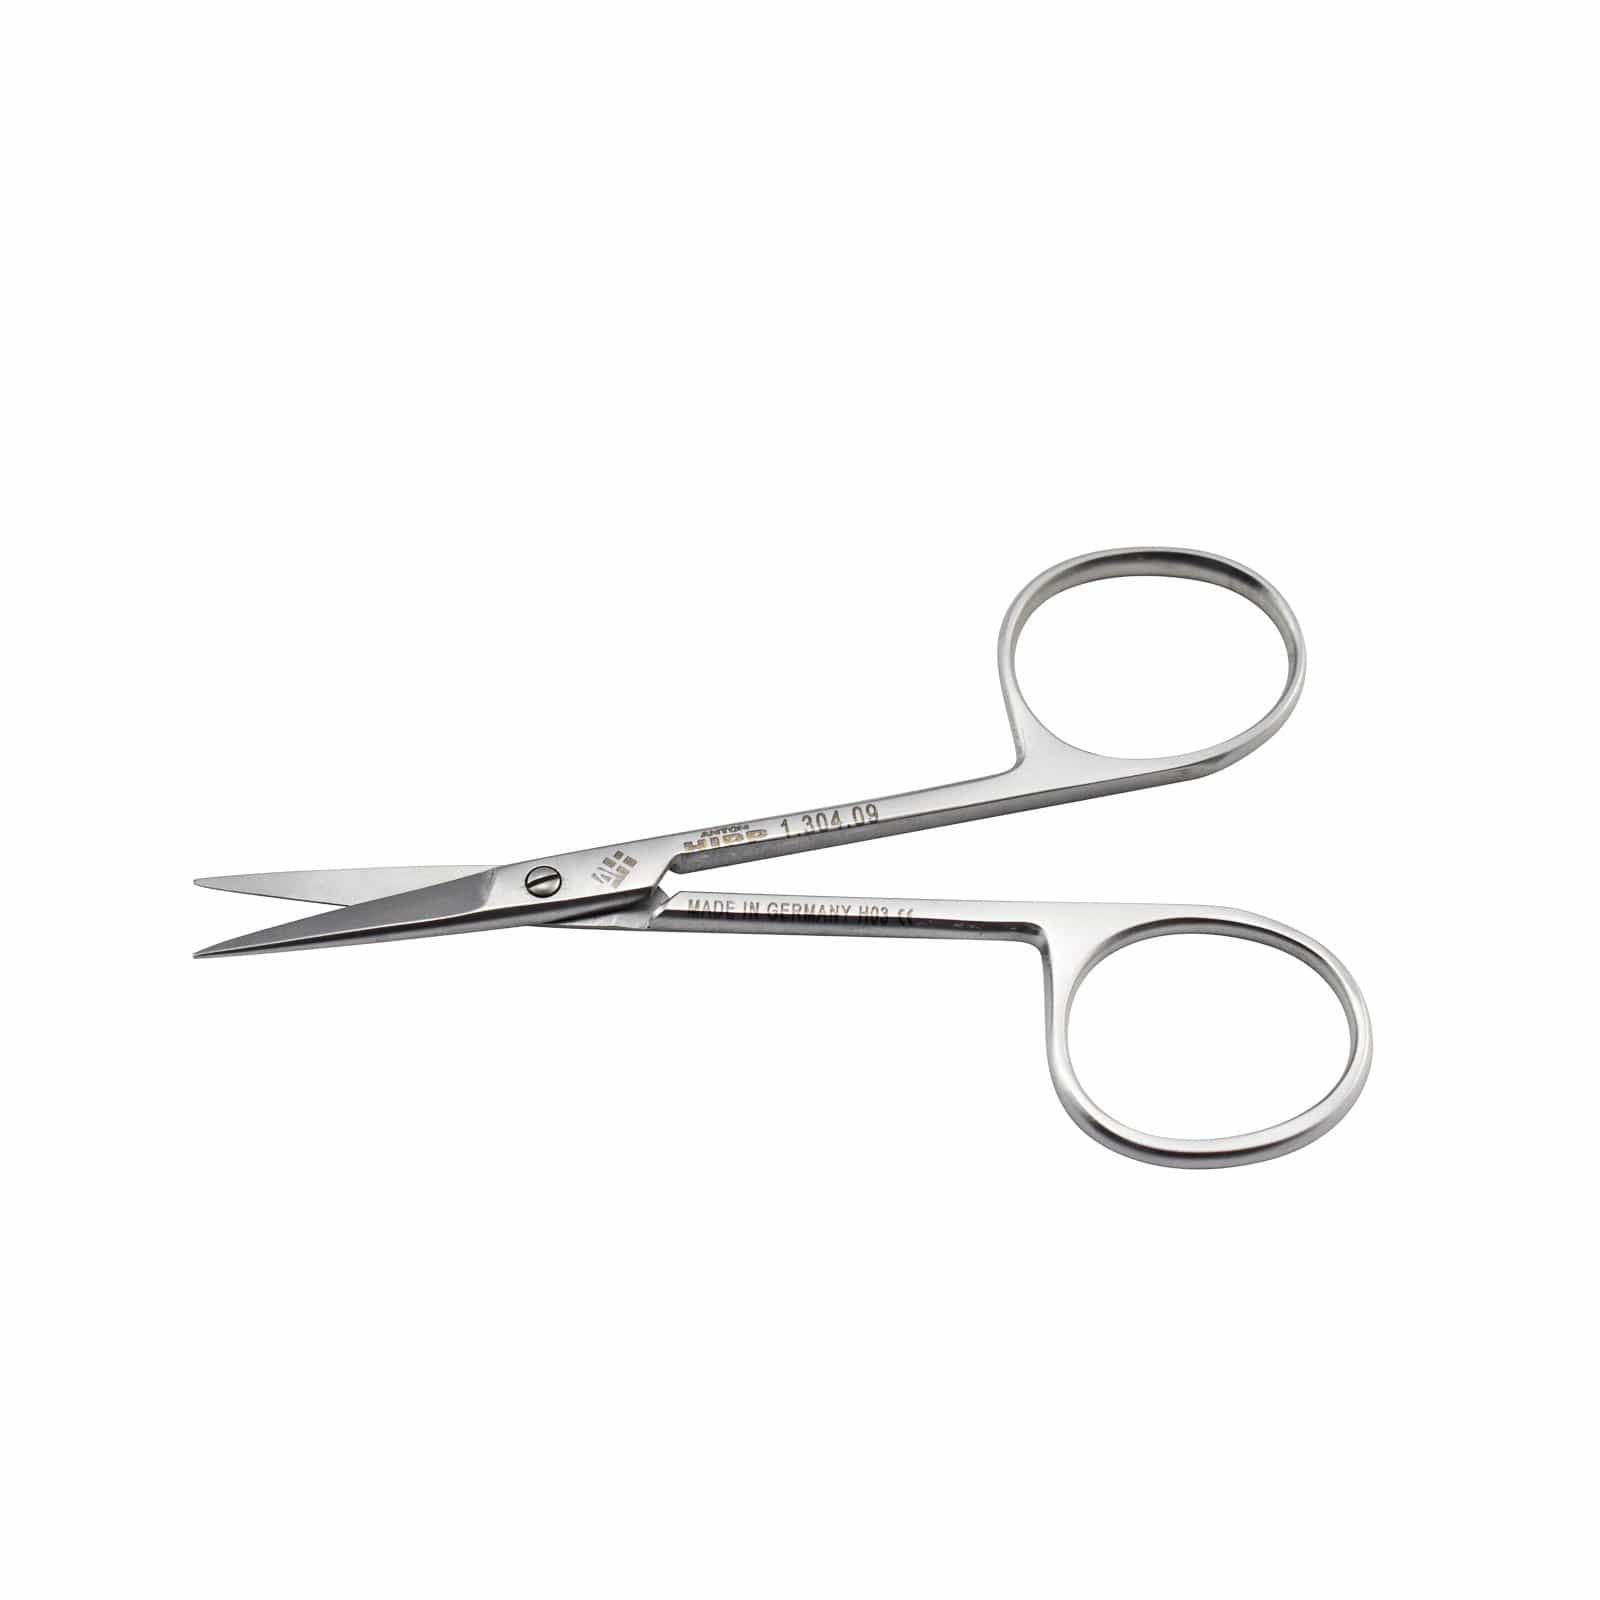 Hipp Surgical Instruments 9cm / Straight / Delicate Hipp Iris Scissors